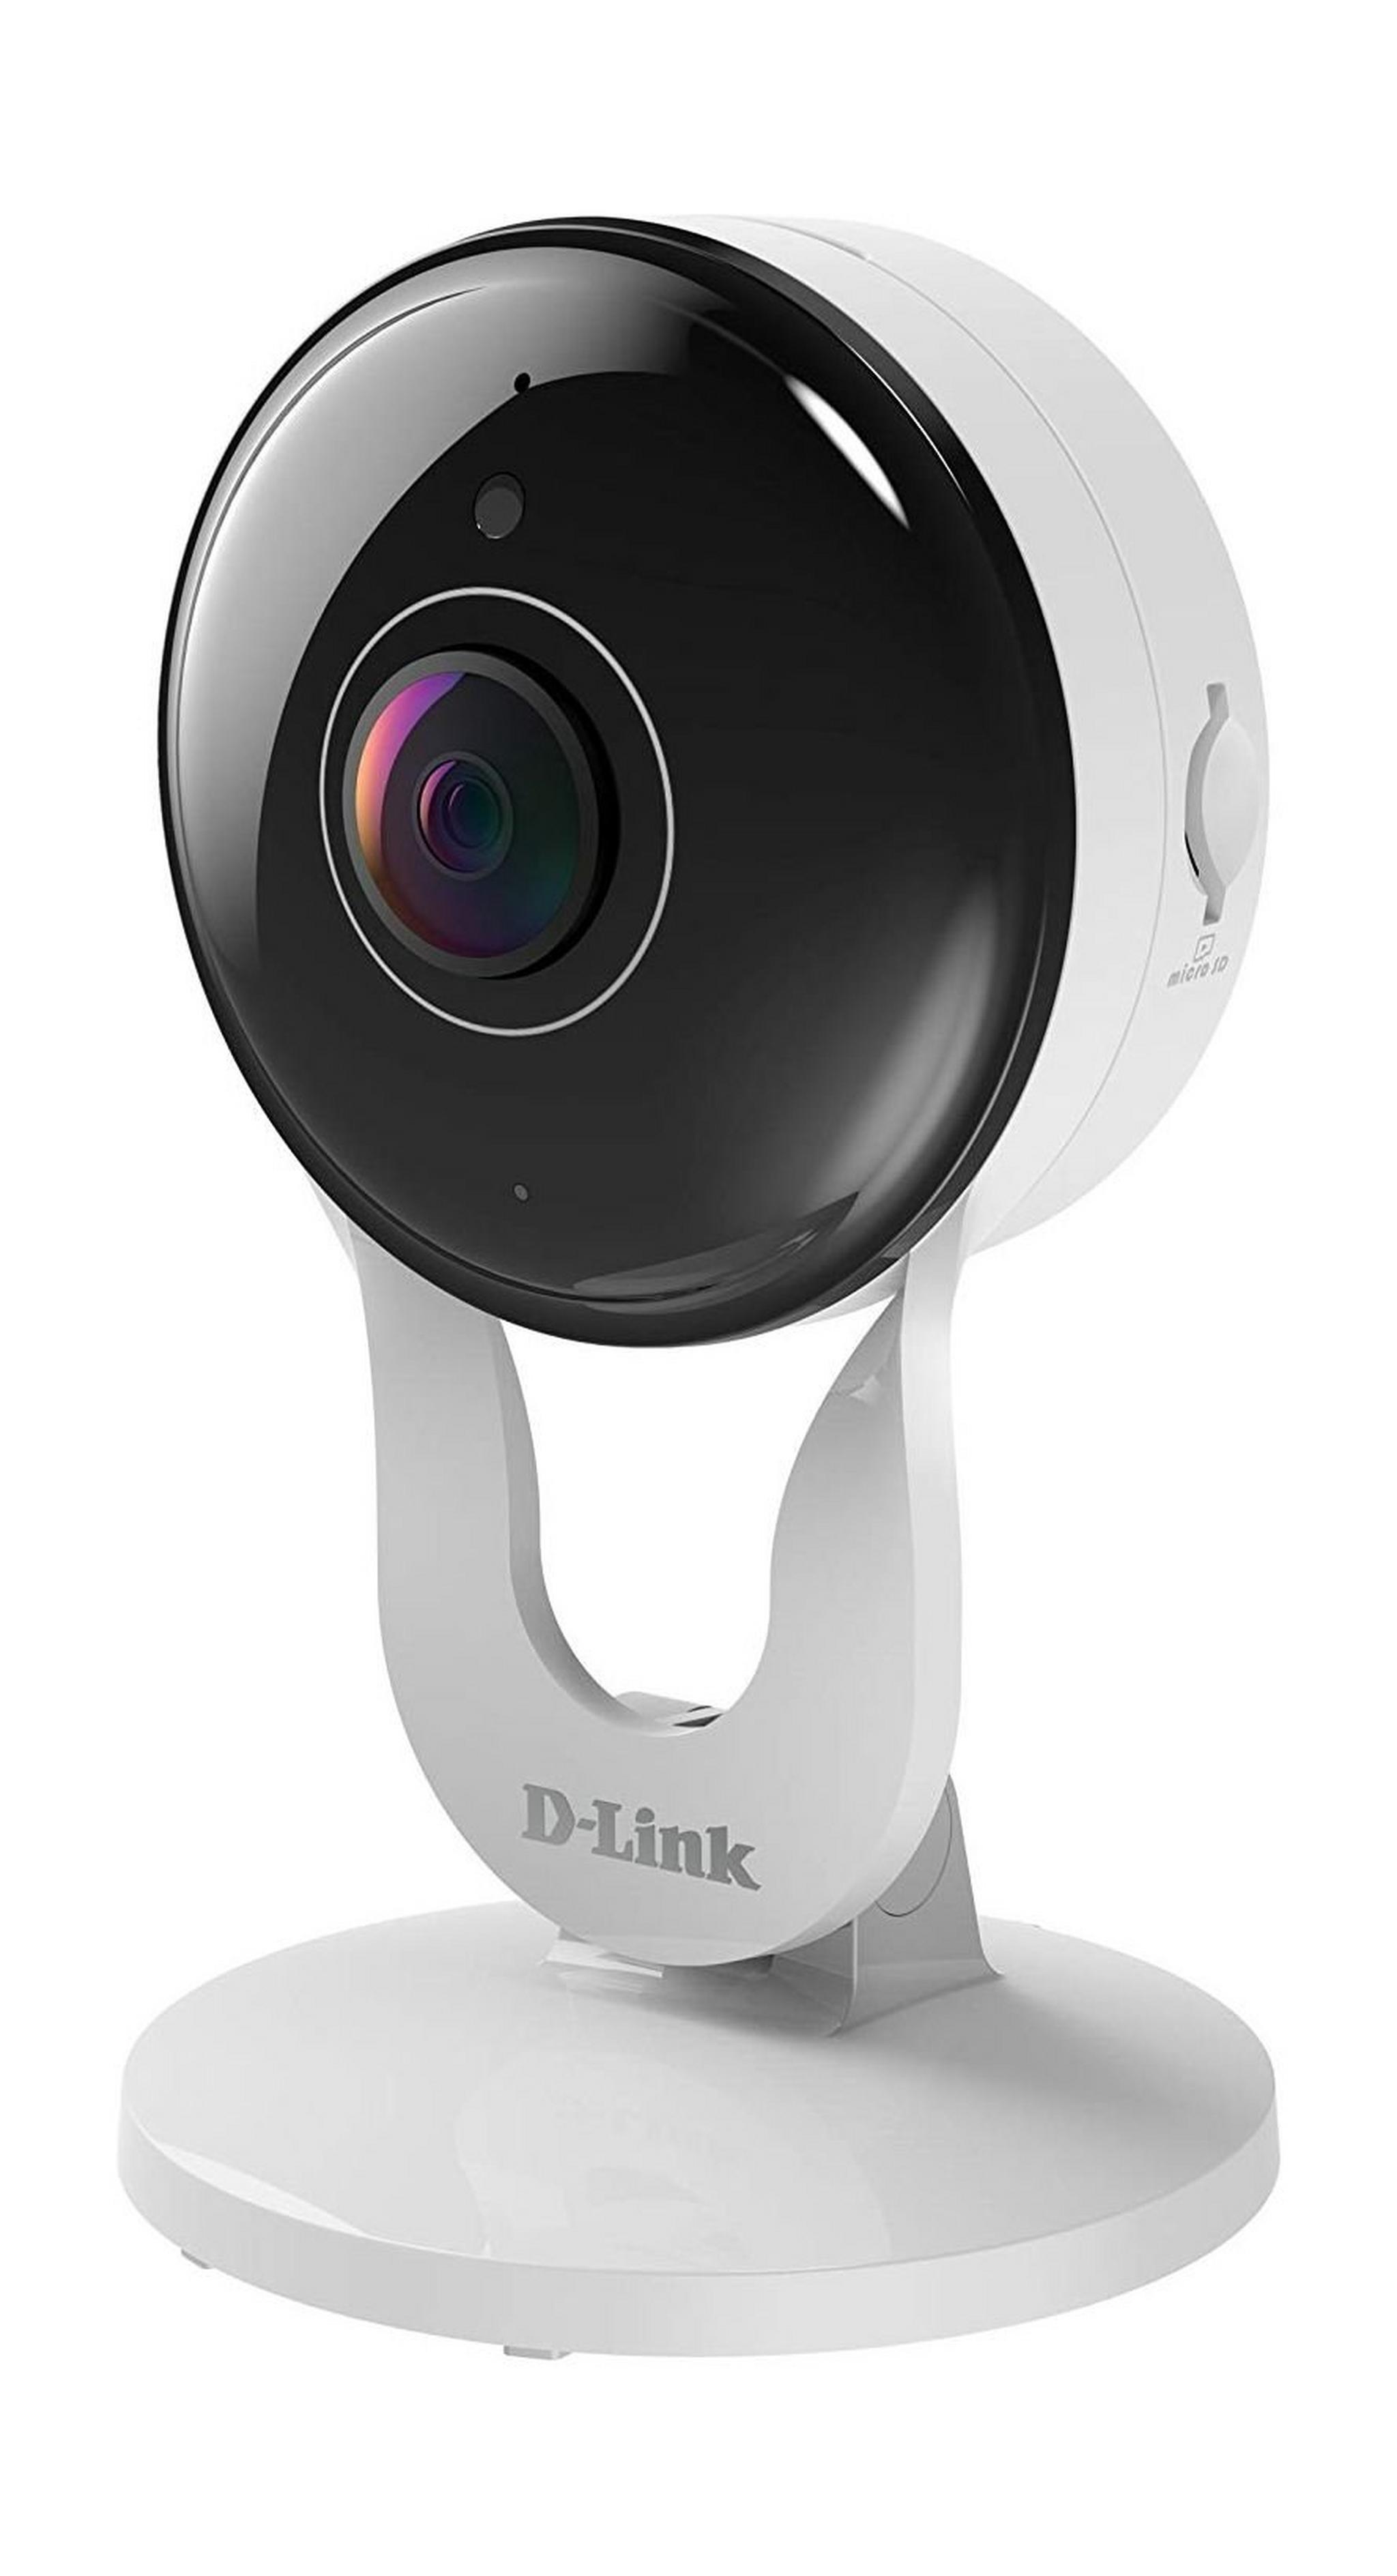 Dlink Wireless IP Camera - DCS-8300LH